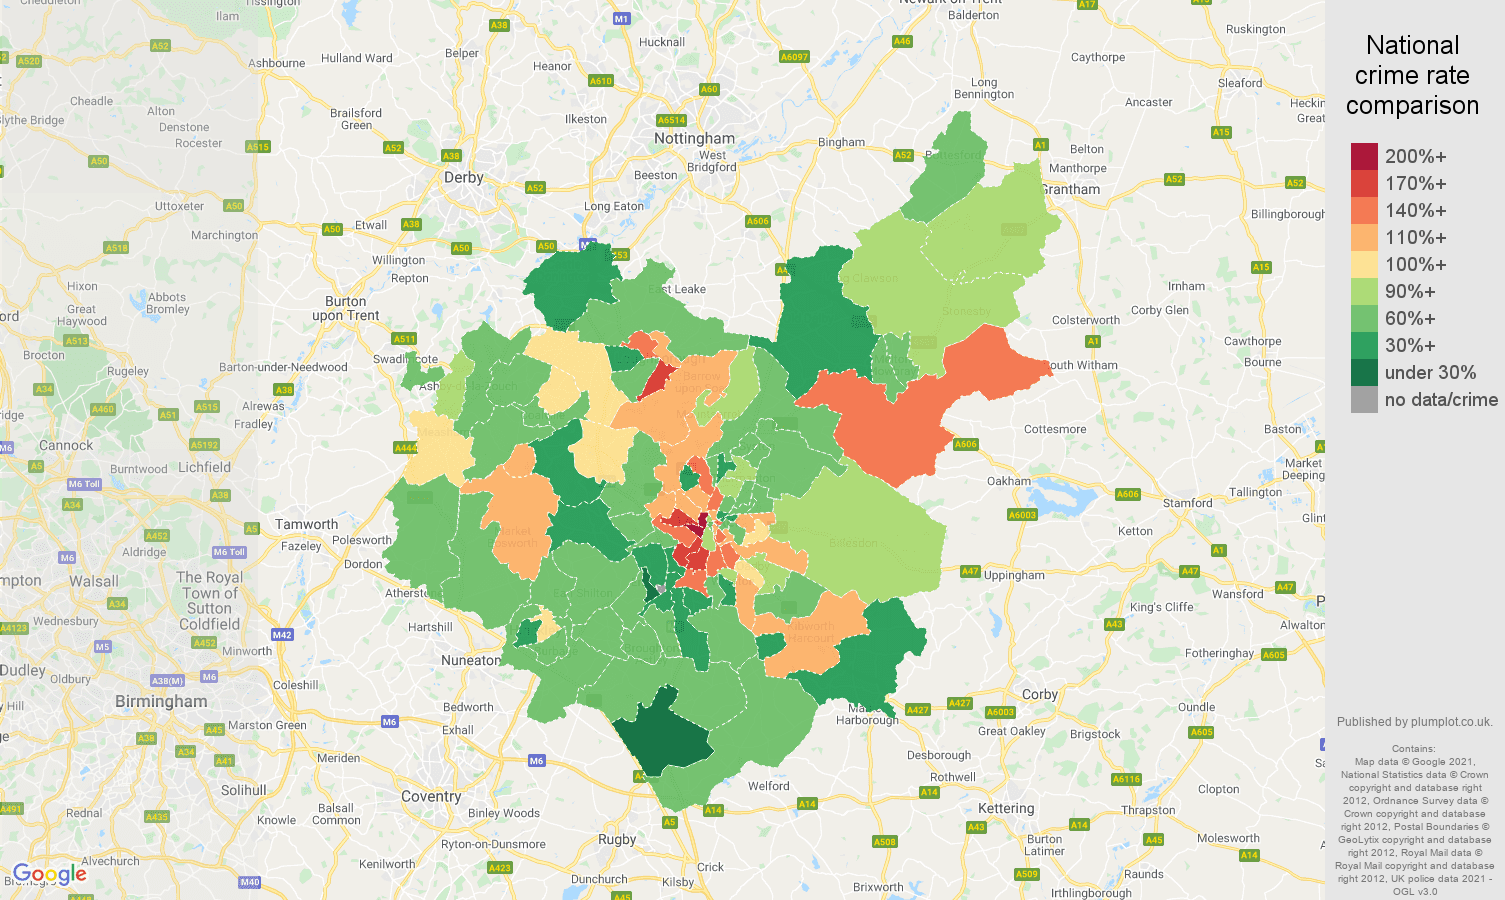 Leicestershire burglary crime rate comparison map